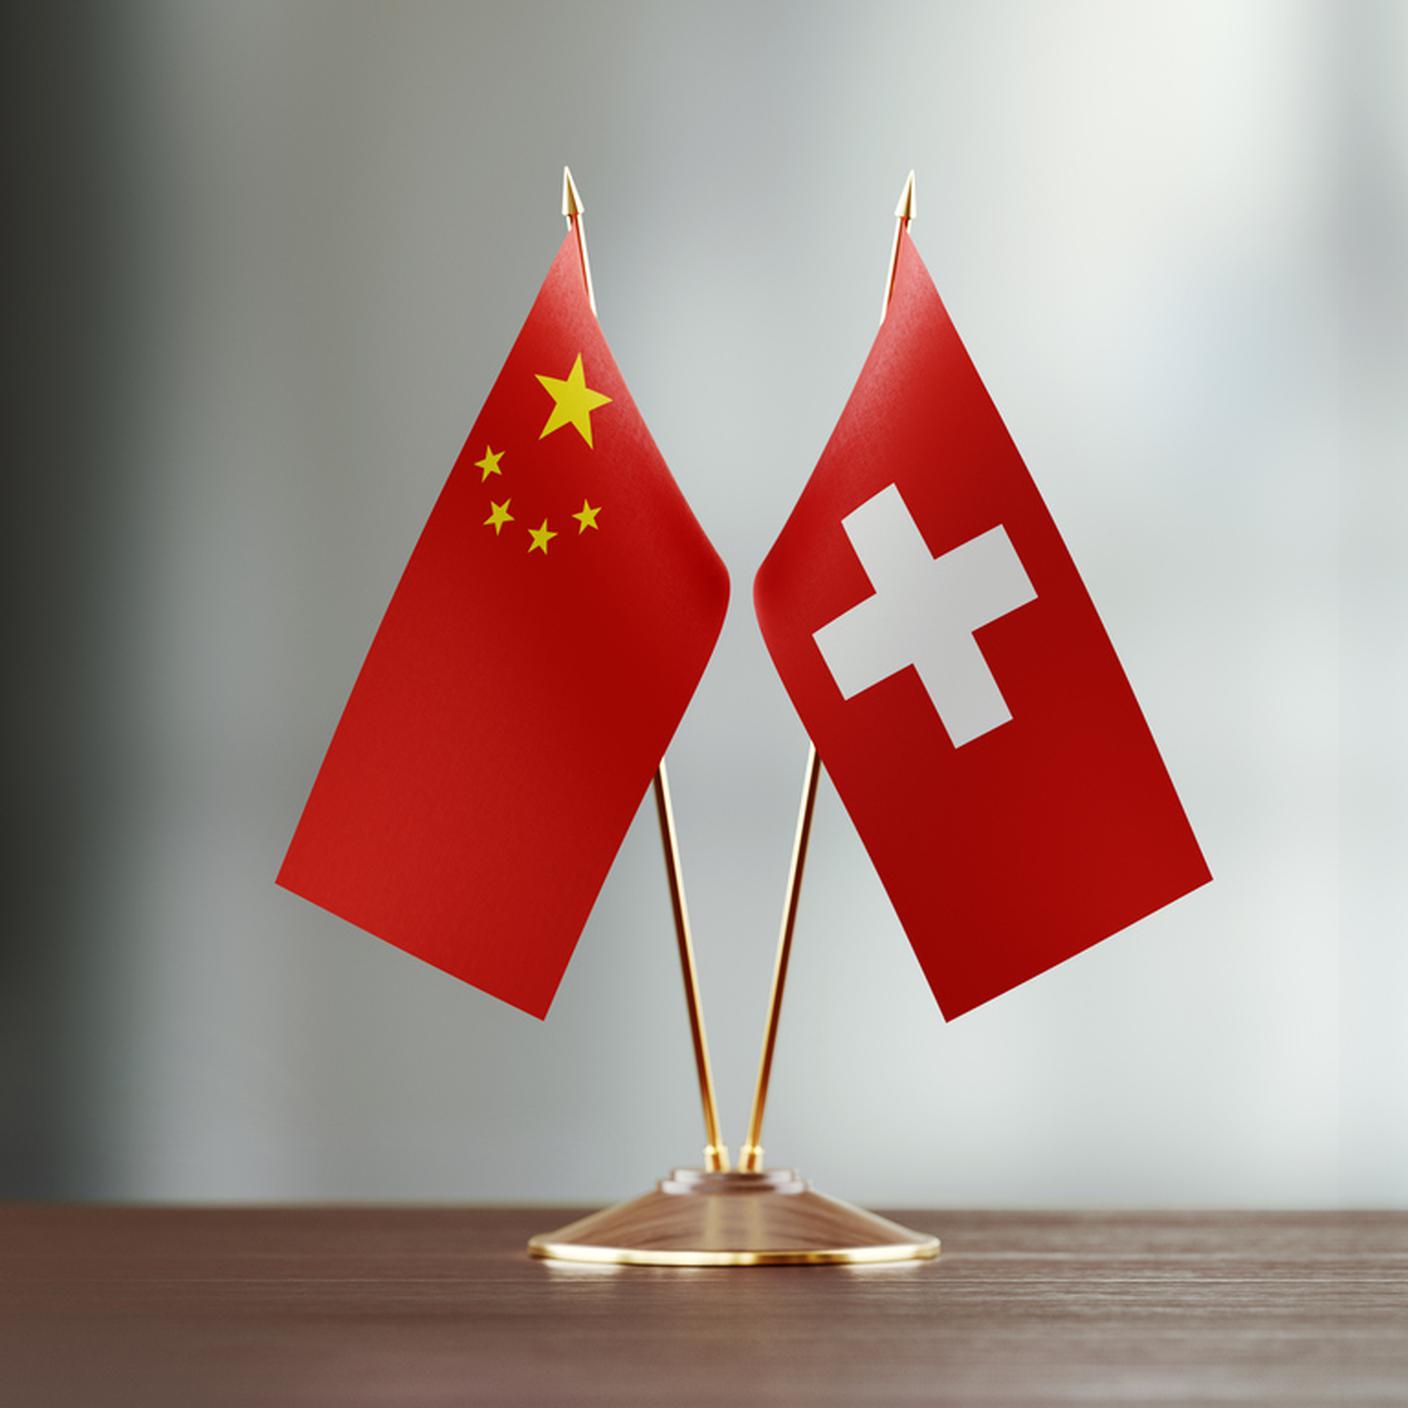 Svizzera e Cina 